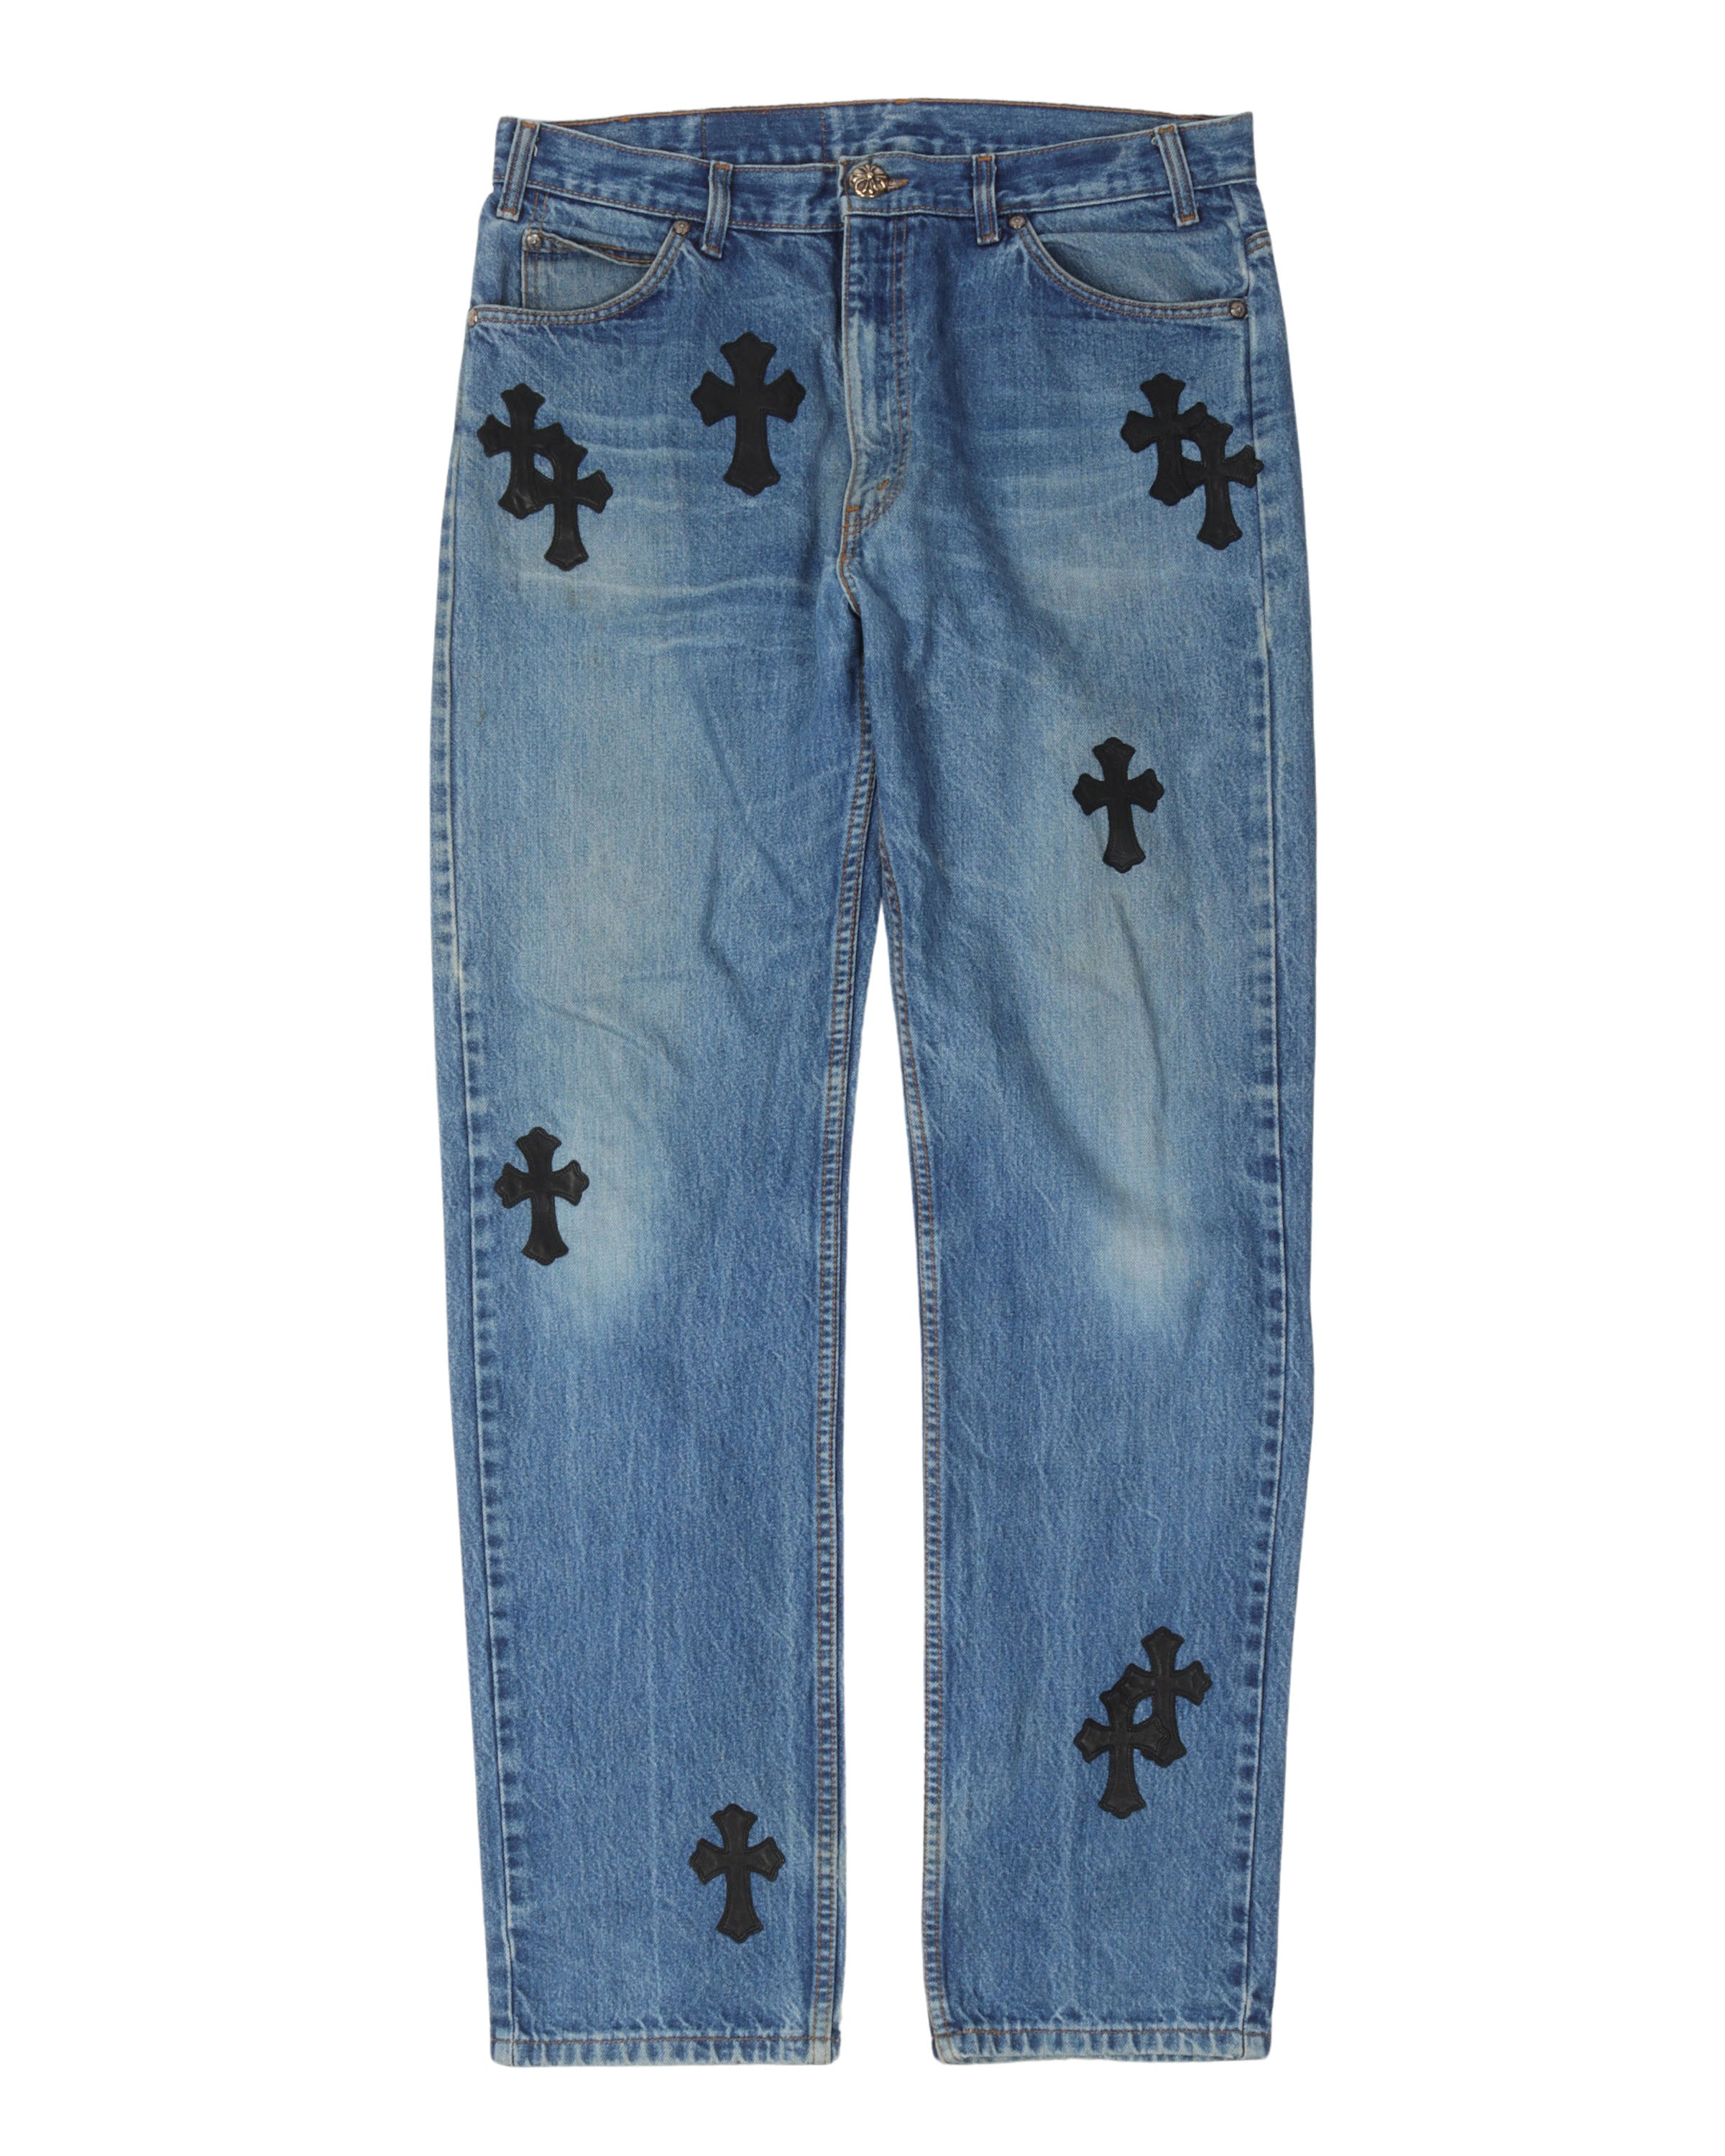 Chrome Hearts Levi's Cross Patch Jeans